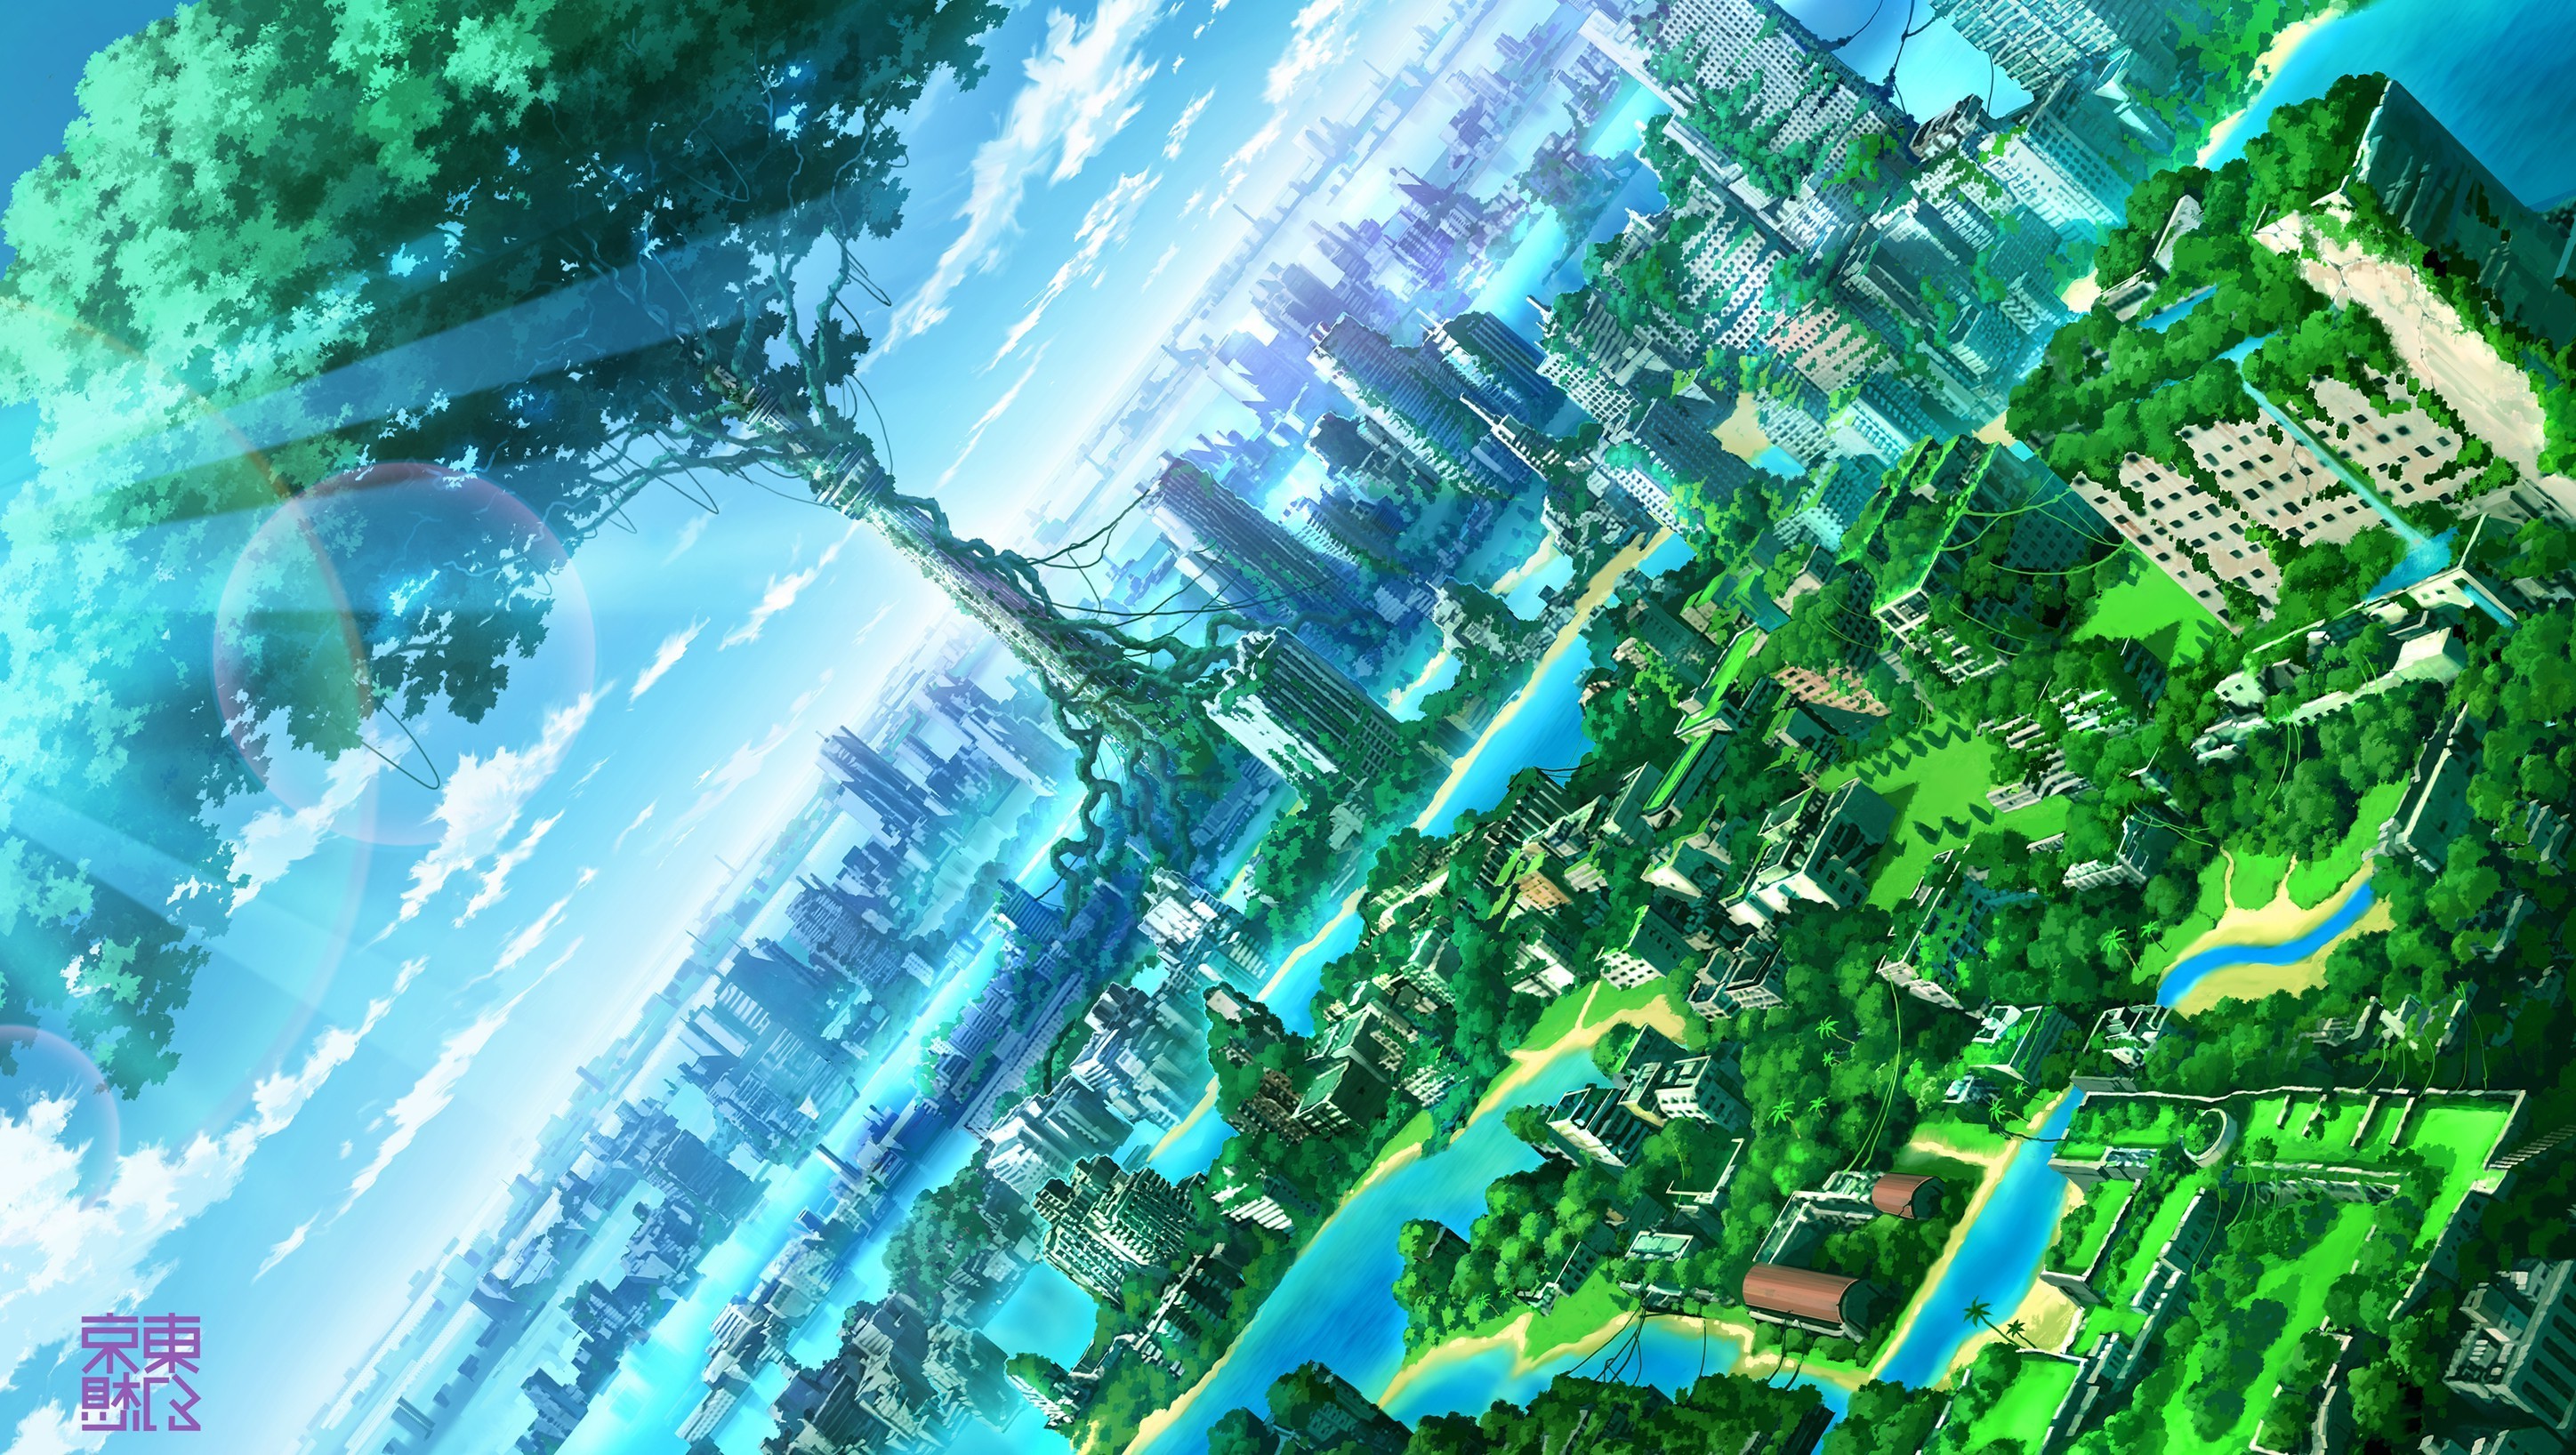 anime fantasy wallpaper,green,water,world,urban design,illustration